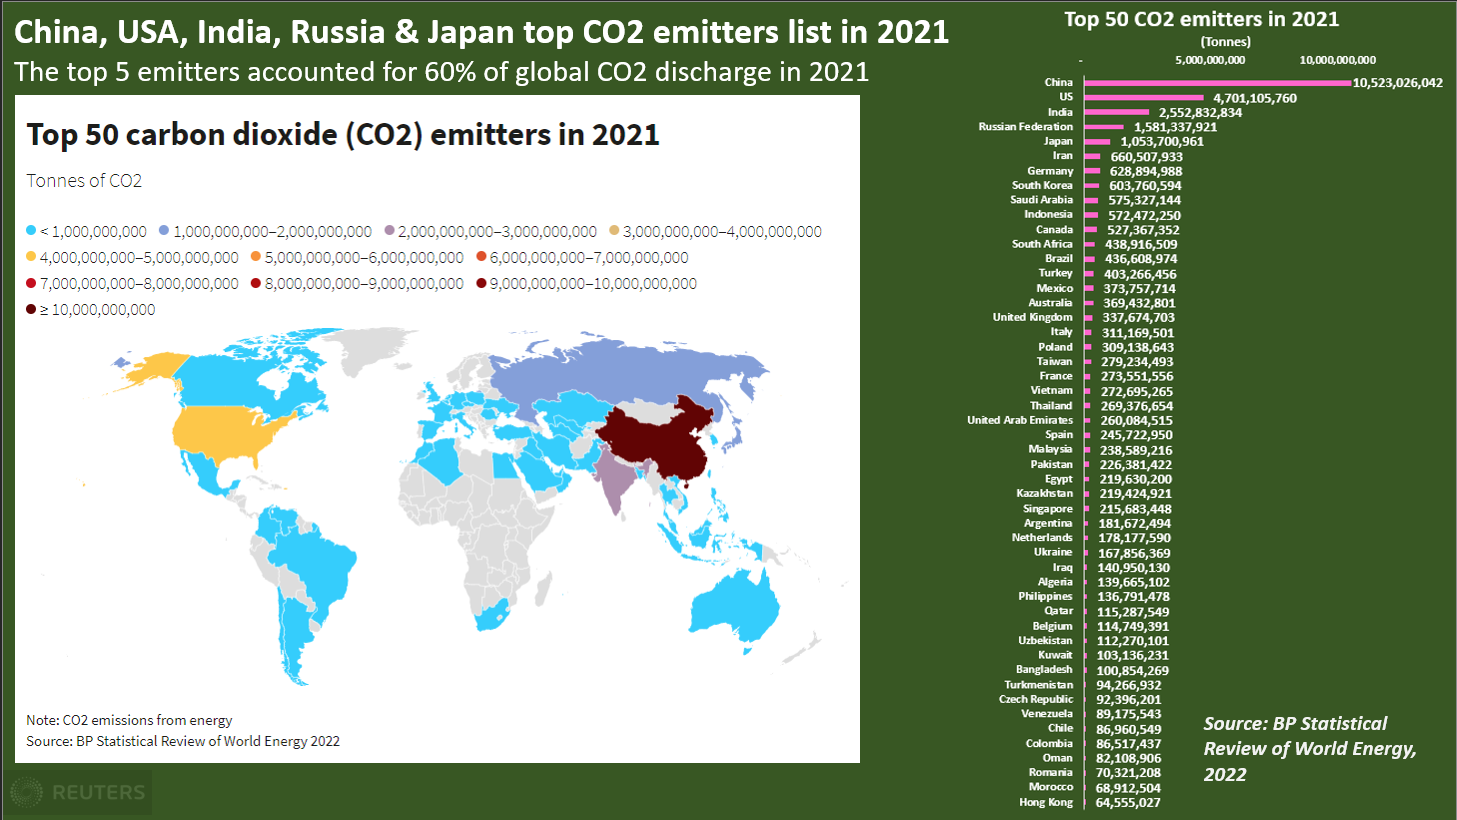 Top 50 global CO2 emitters